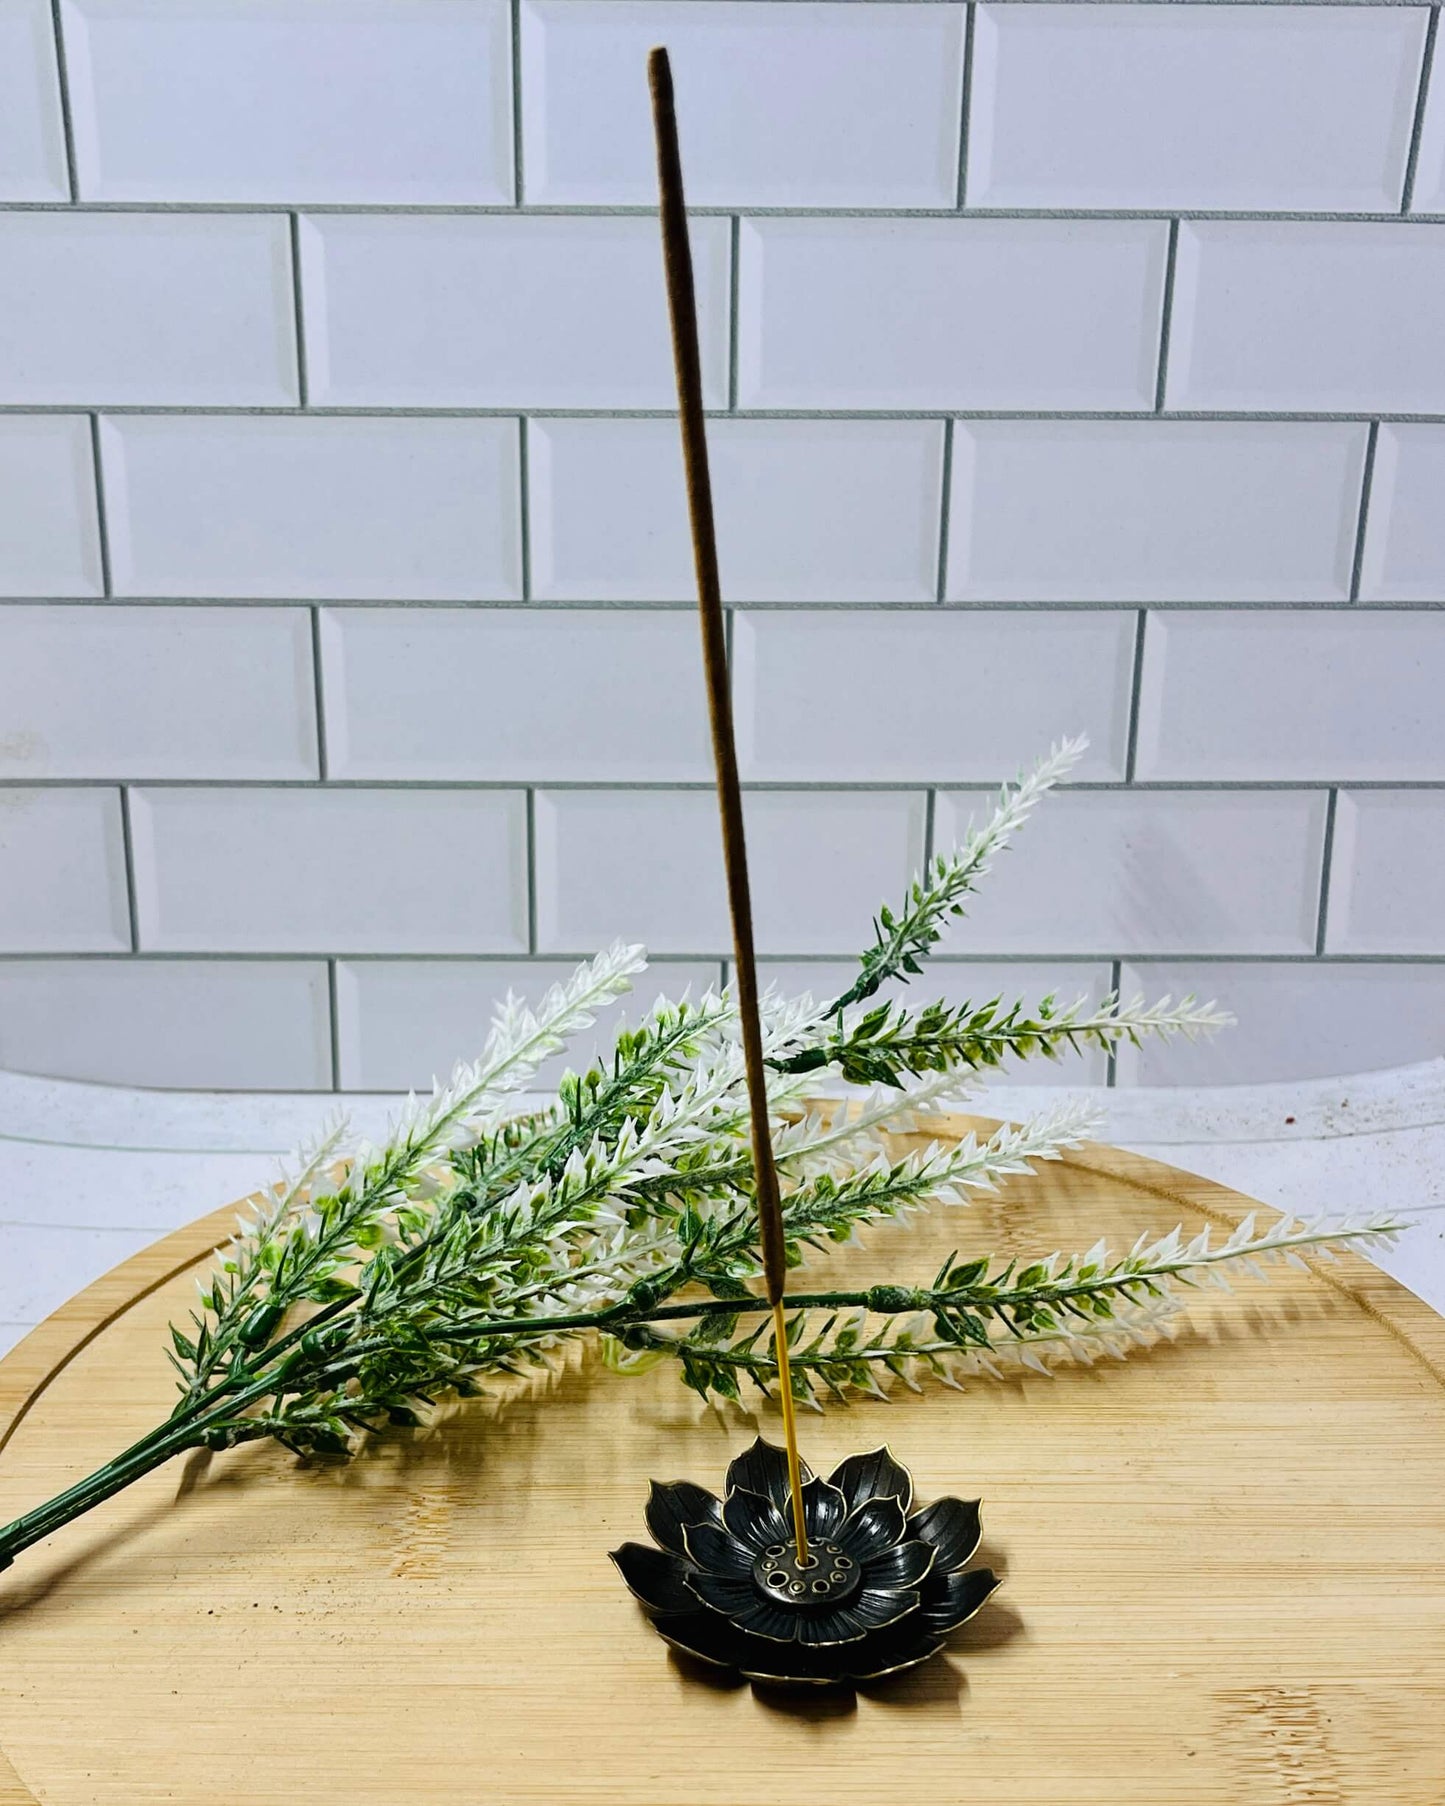 Lotus Incense Stick Holder